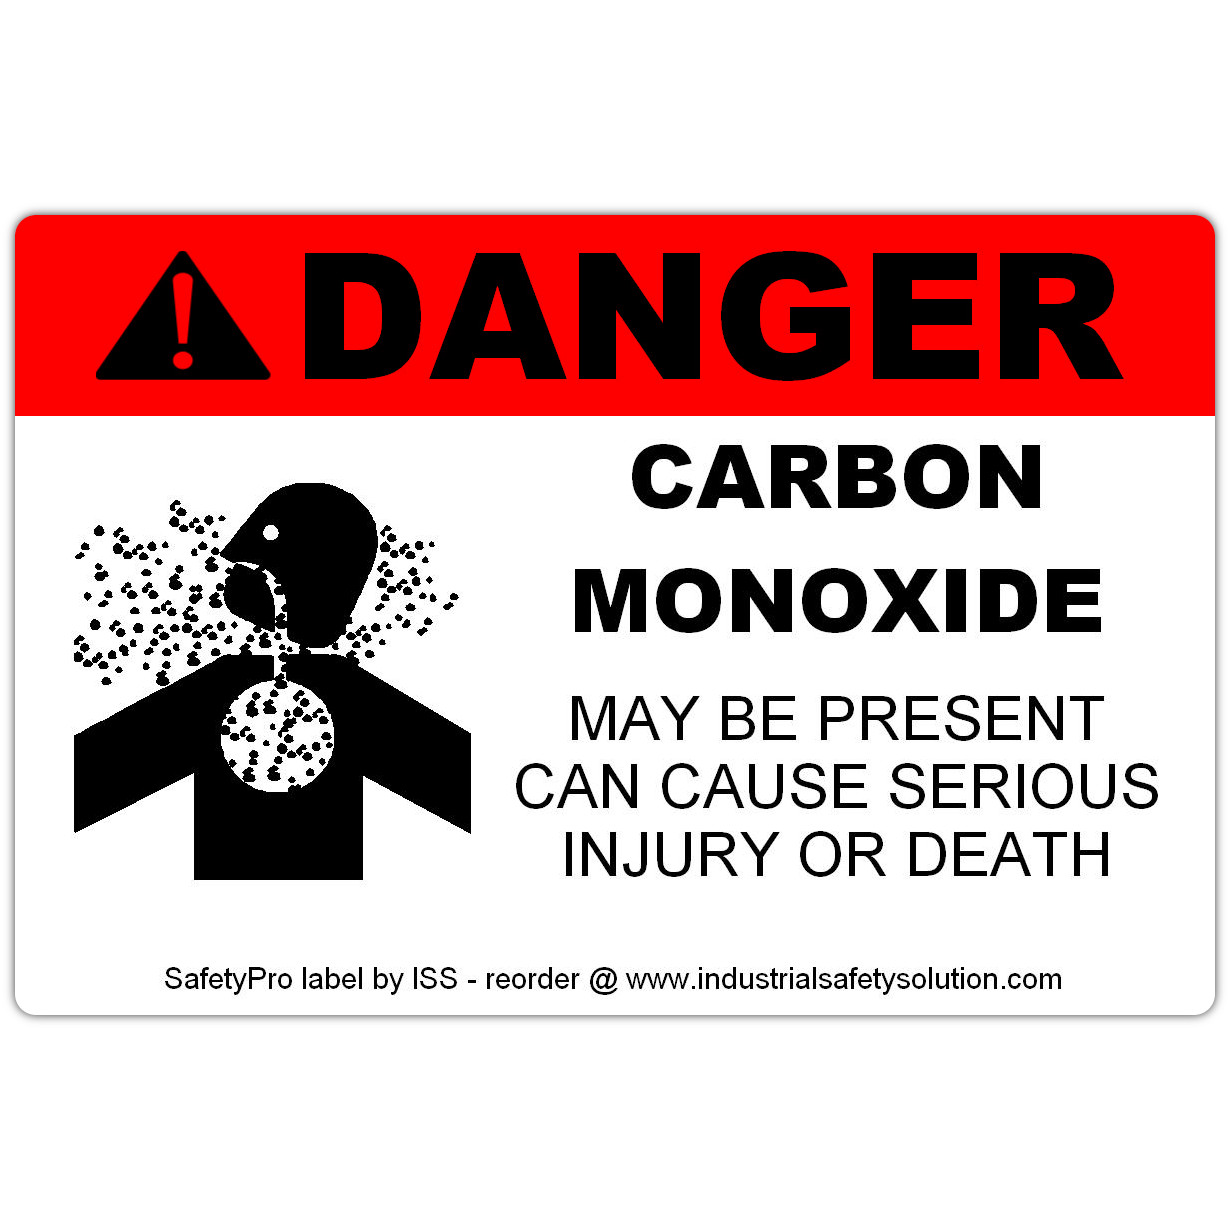 Detail view for 4" x 6" DANGER Carbon Monoxide Safety Label